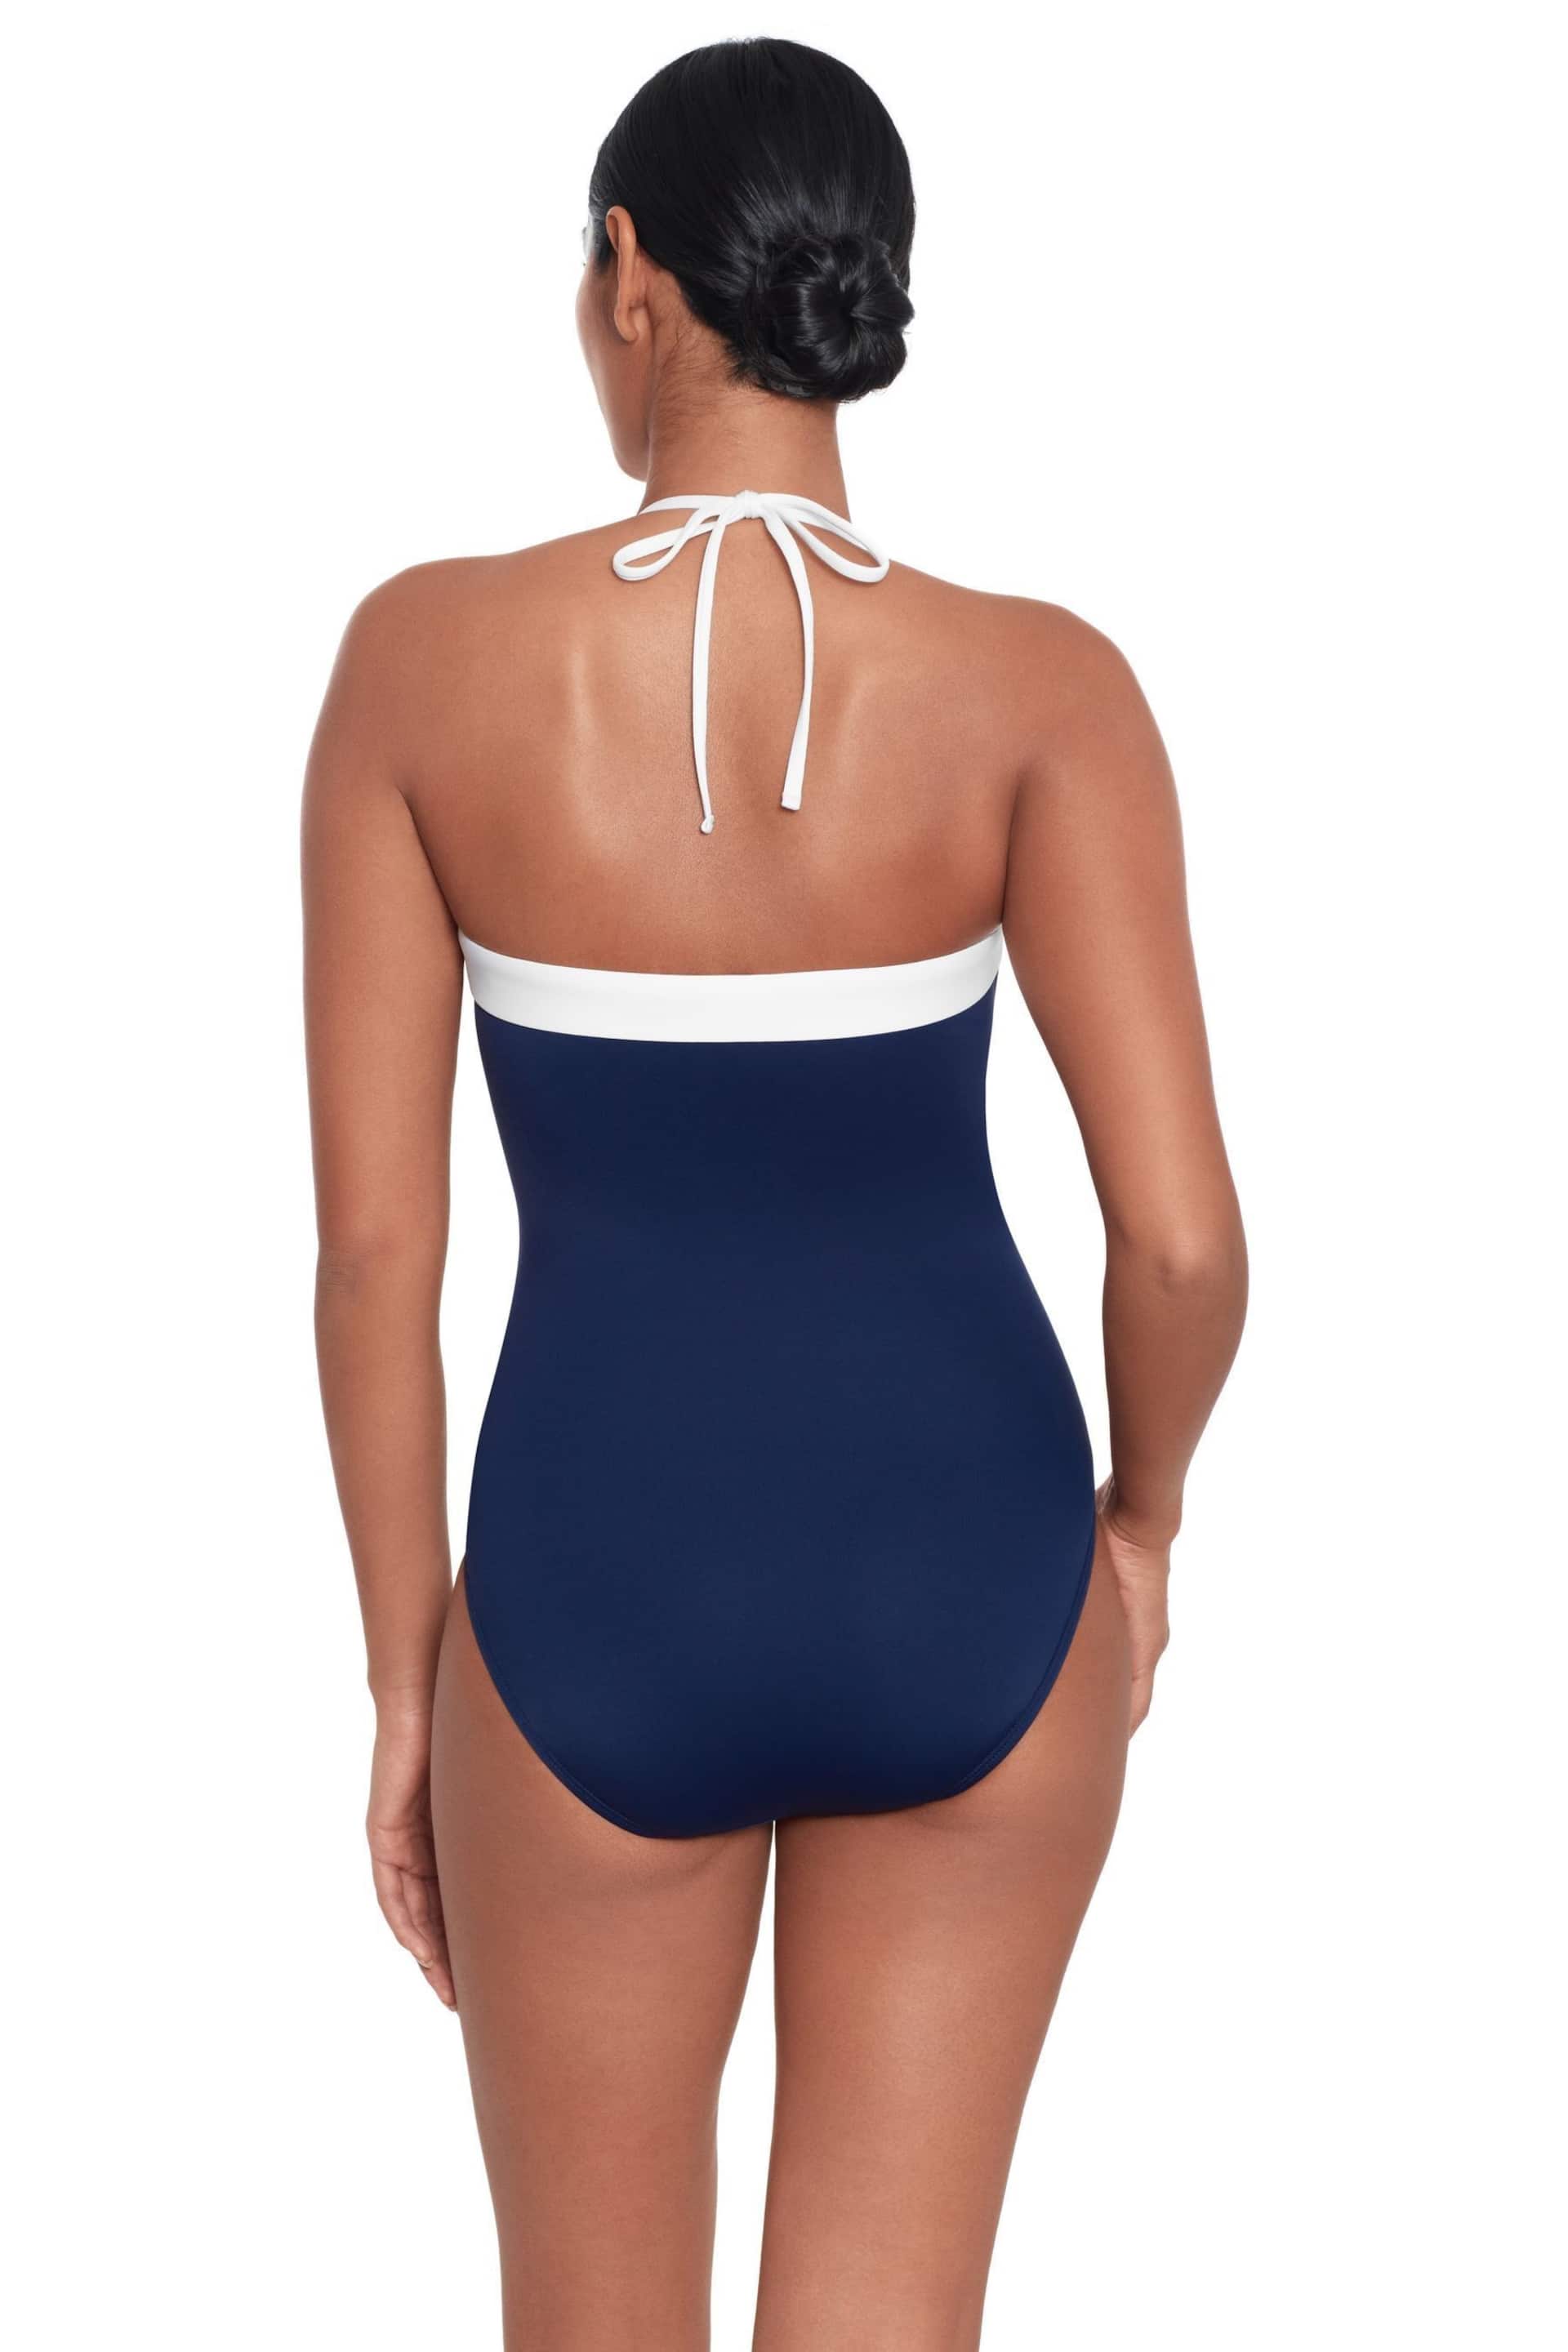 Lauren Ralph Lauren Blue Bel Air Modern Bandeau Swimsuit - Image 2 of 5